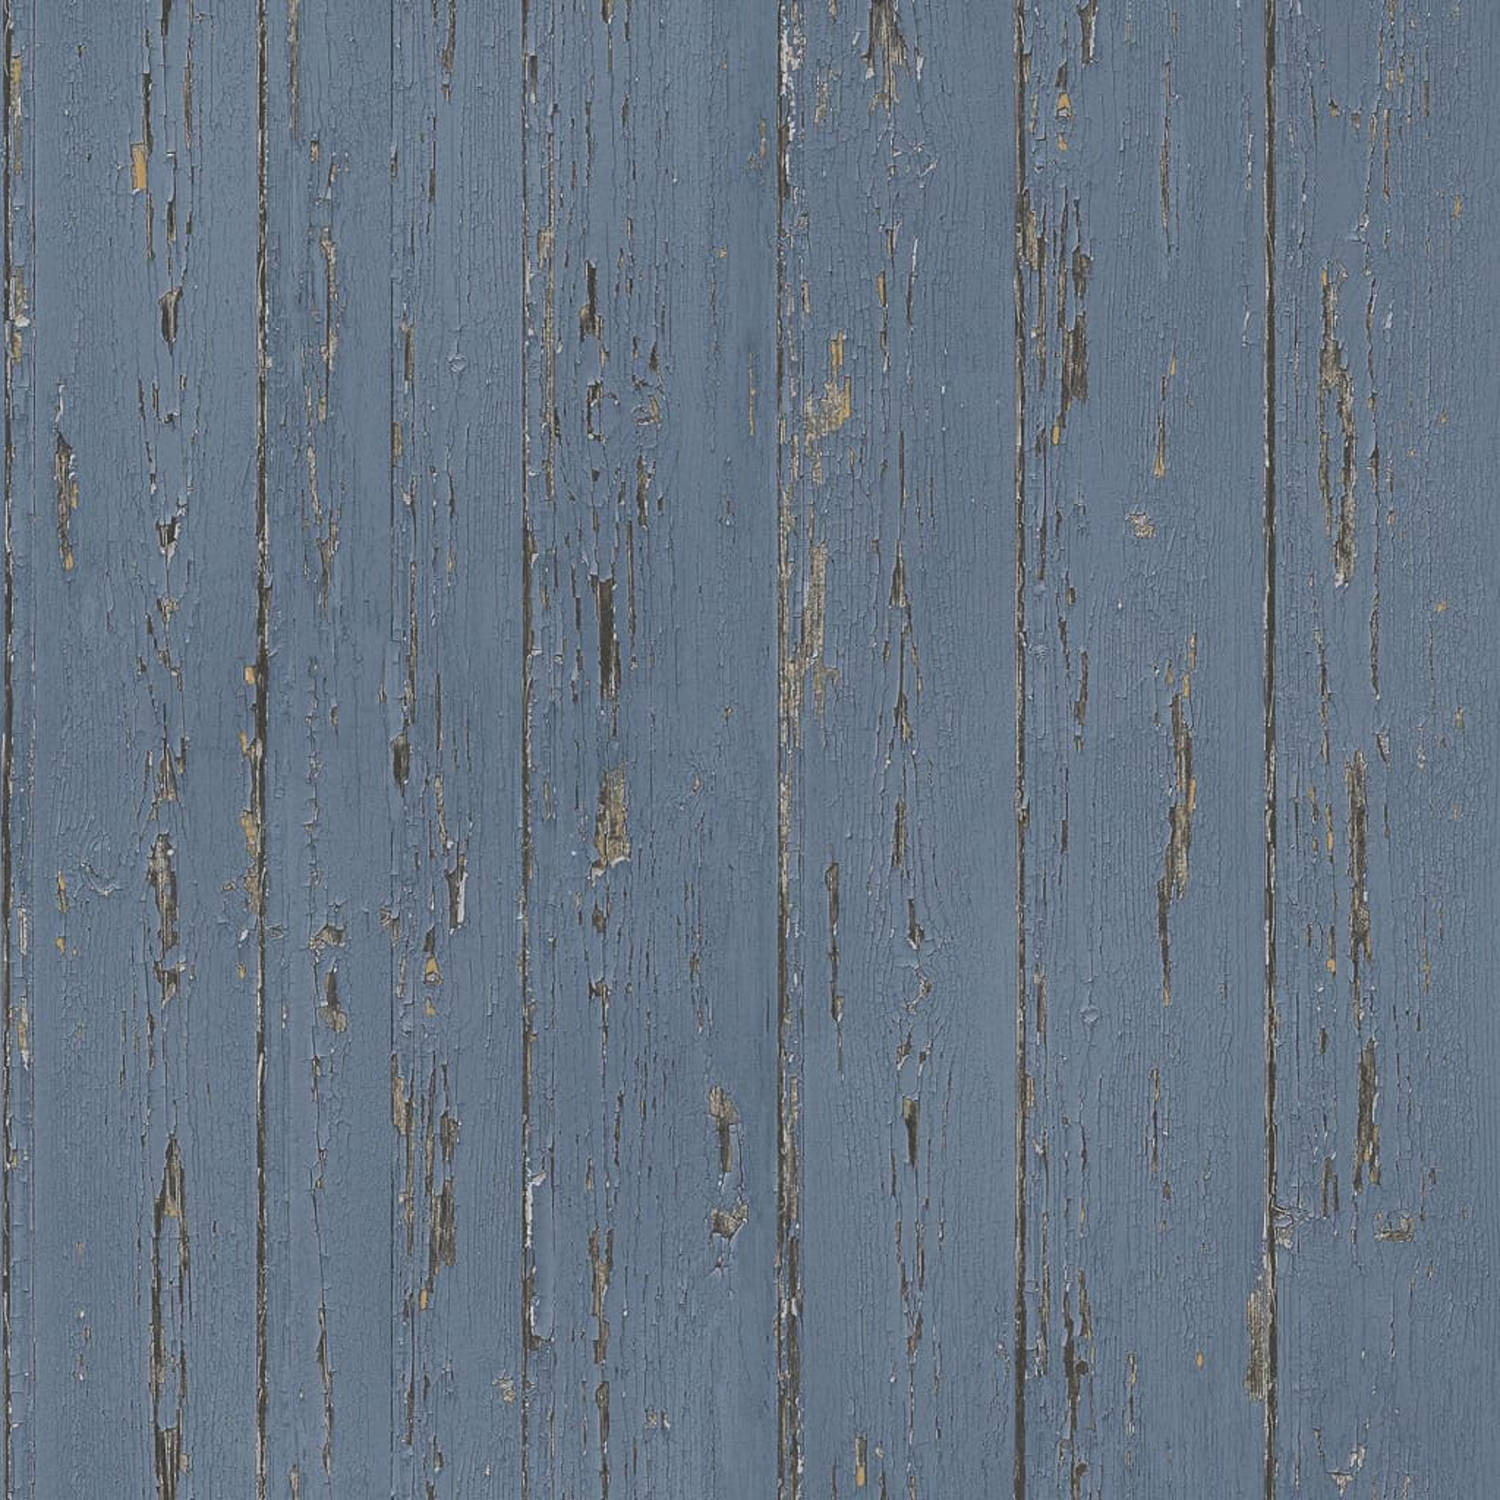 Homestyle Behang Old Wood blauw